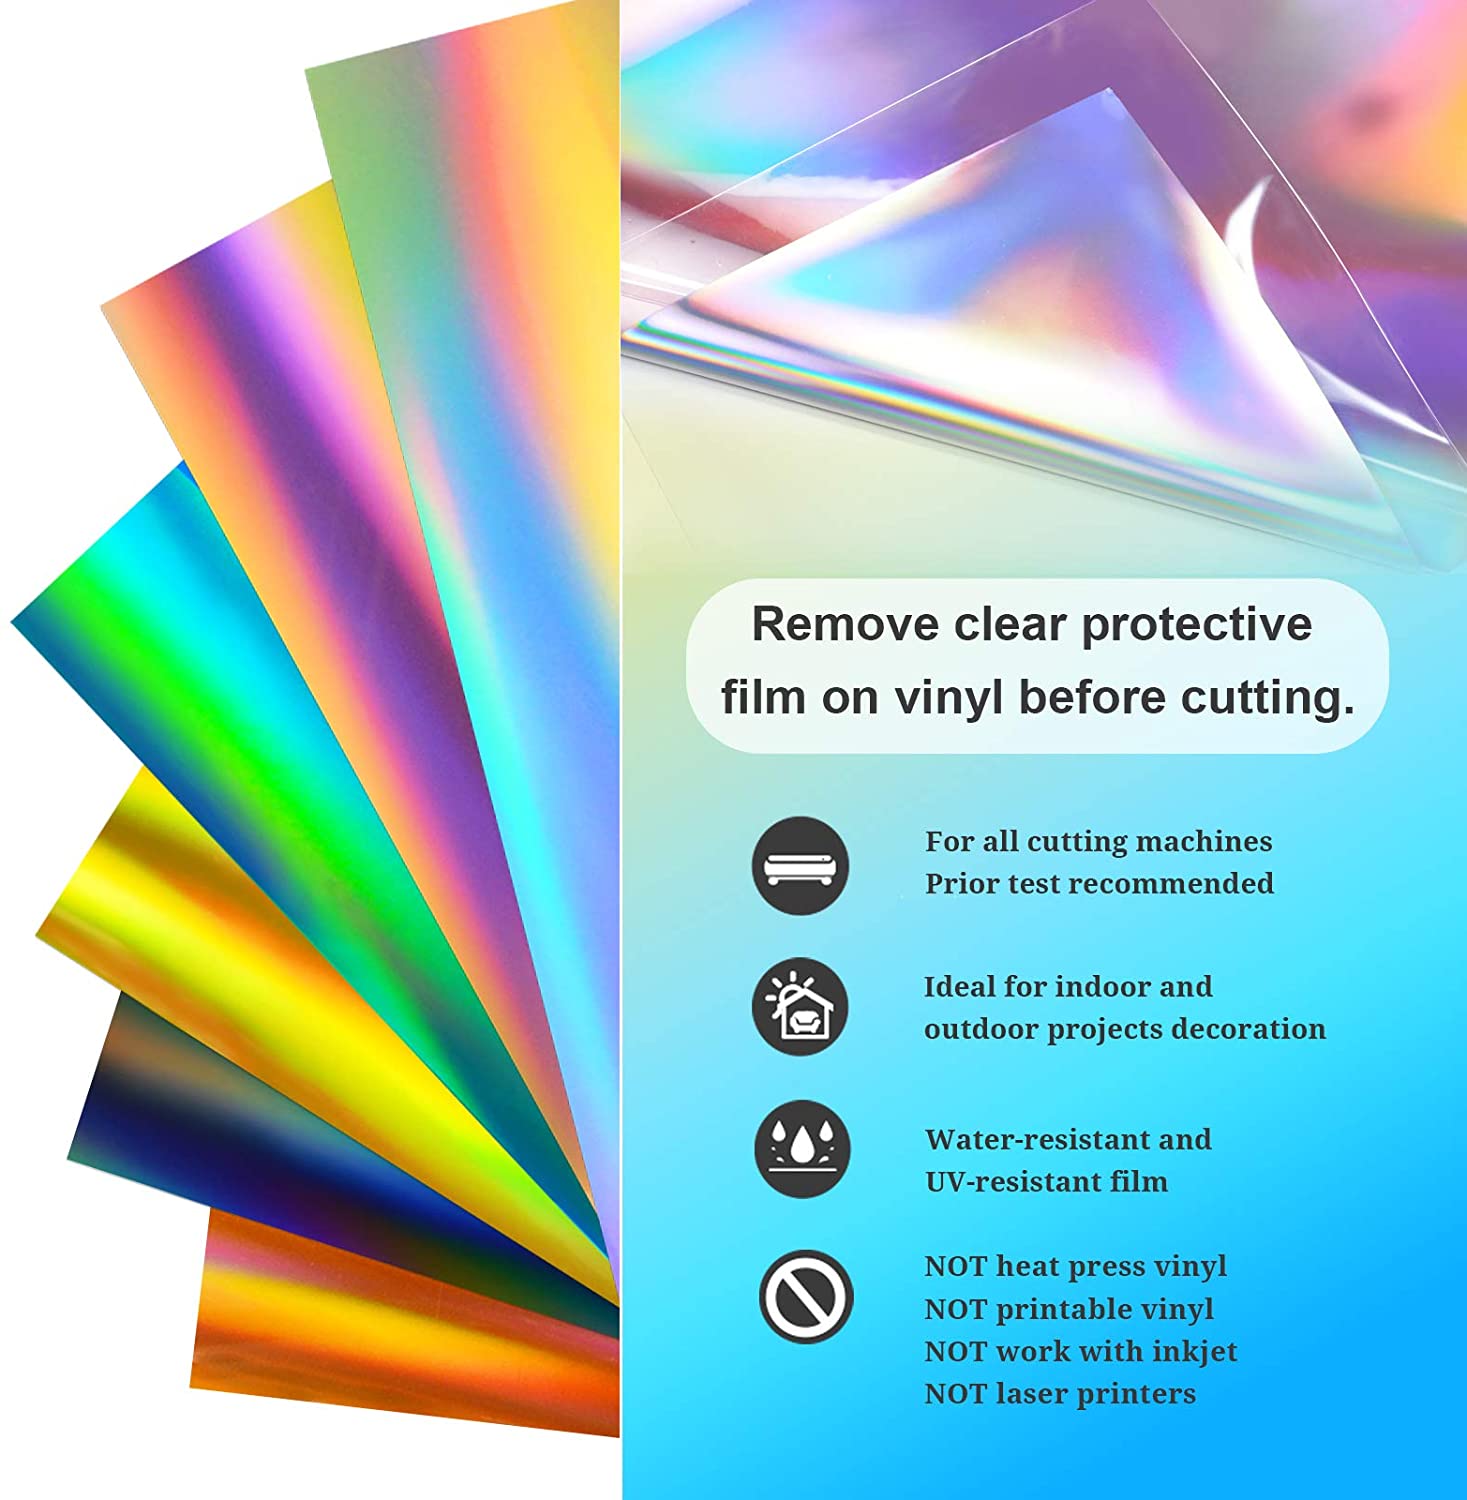 Rainbow Colors Adhesive Vinyl Sheets Pack